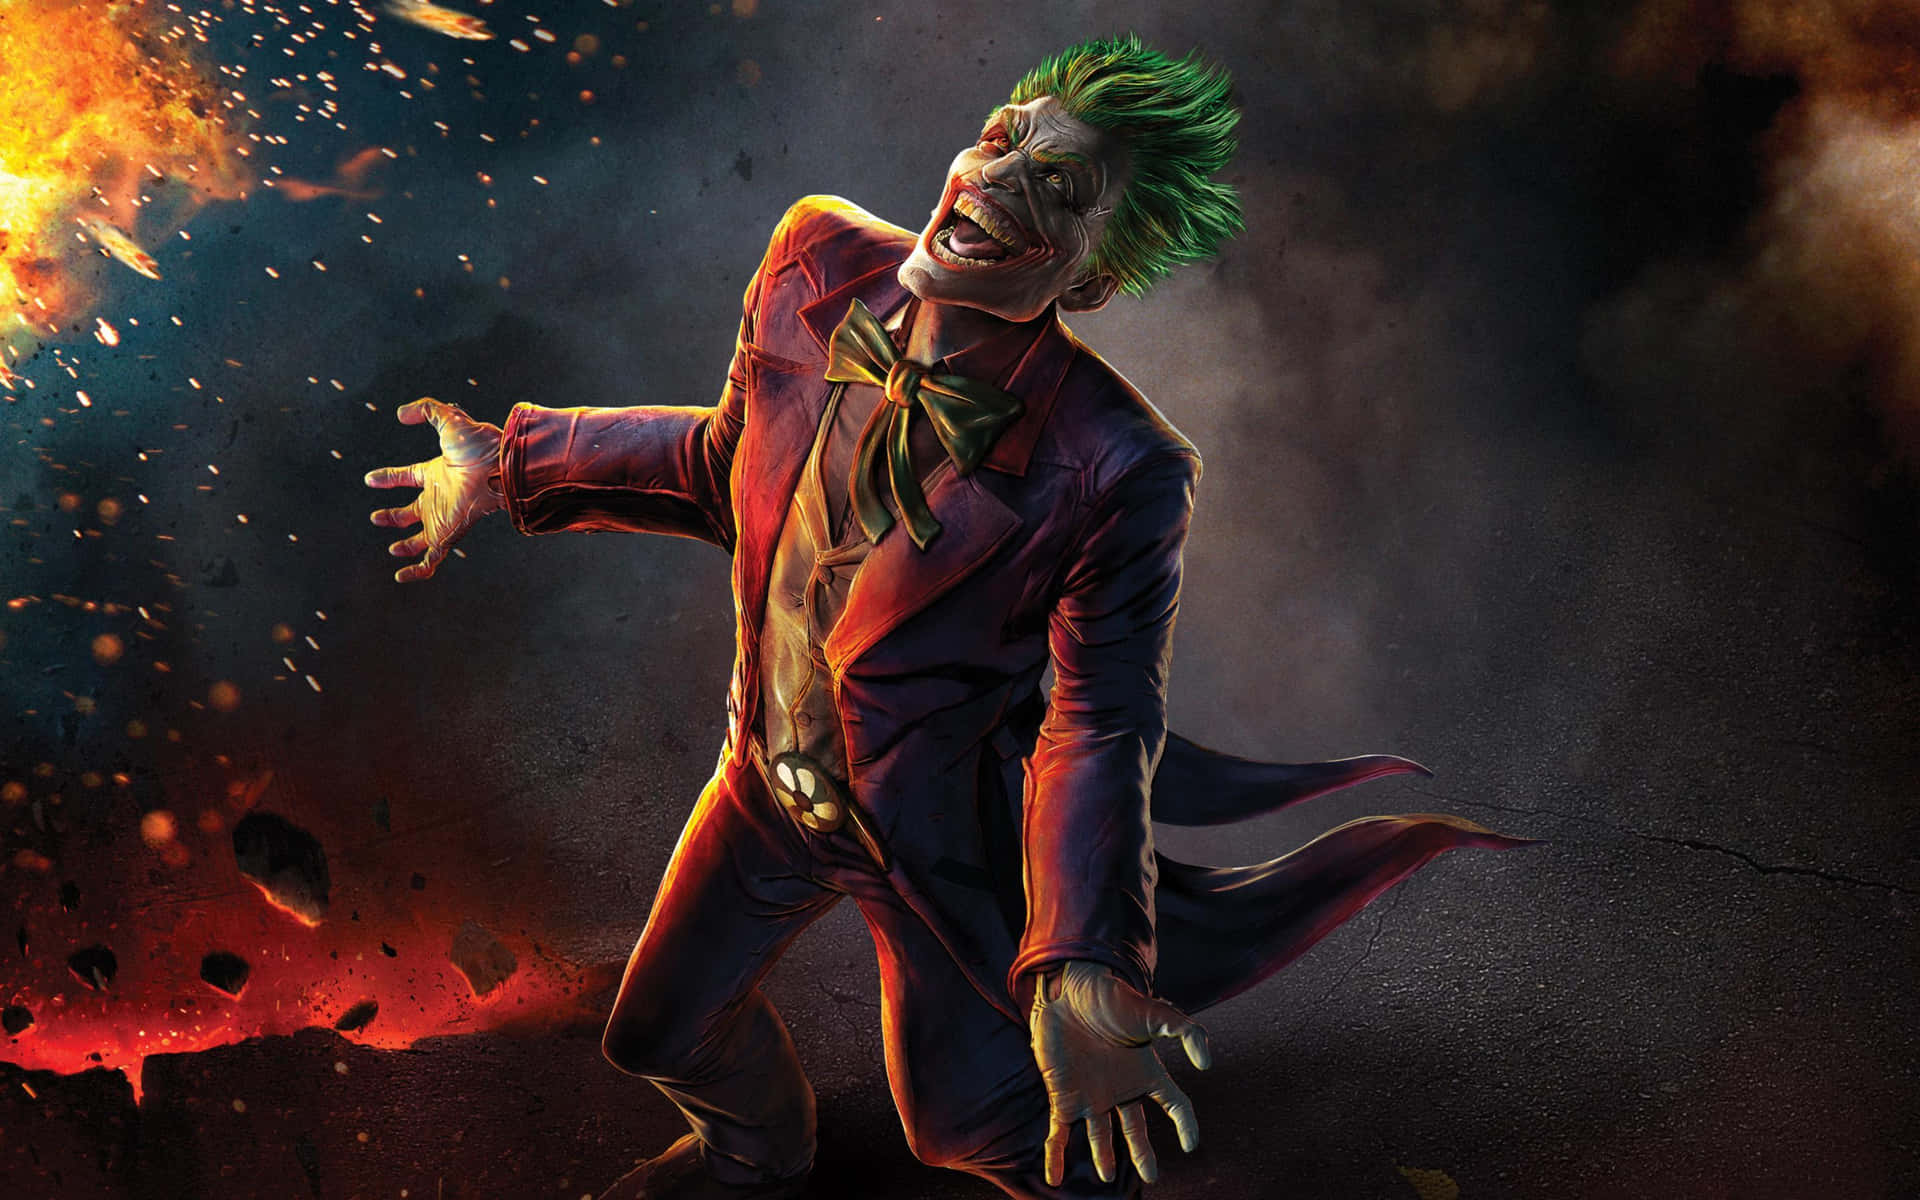 Maniacal Joker Laughing In The Dark